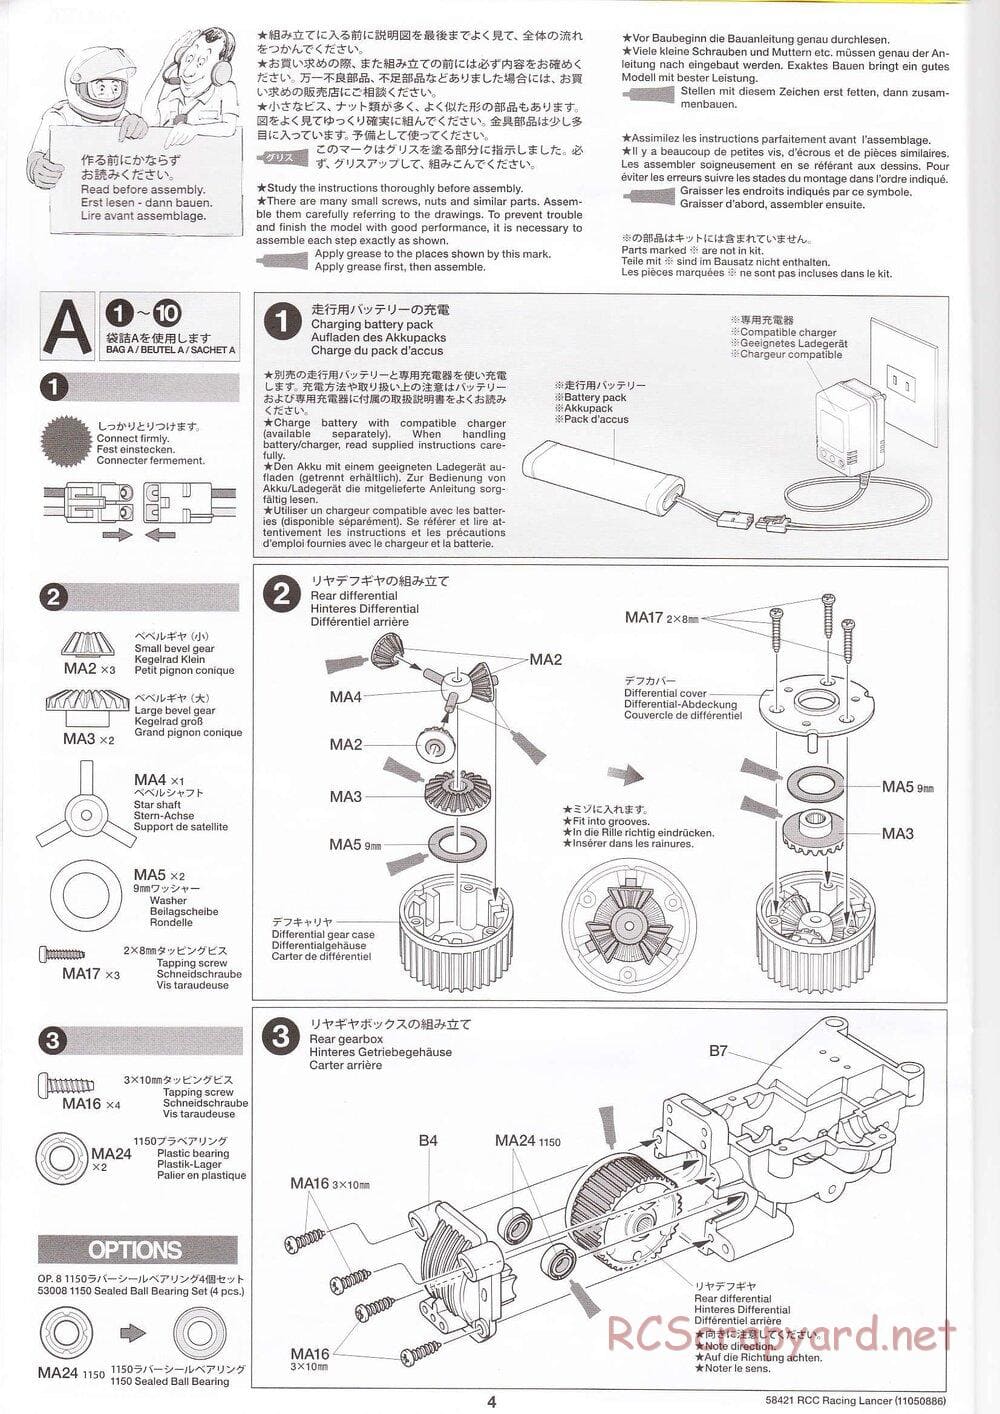 Tamiya - Mitsubishi Racing Lancer - DF-01 Chassis - Manual - Page 4